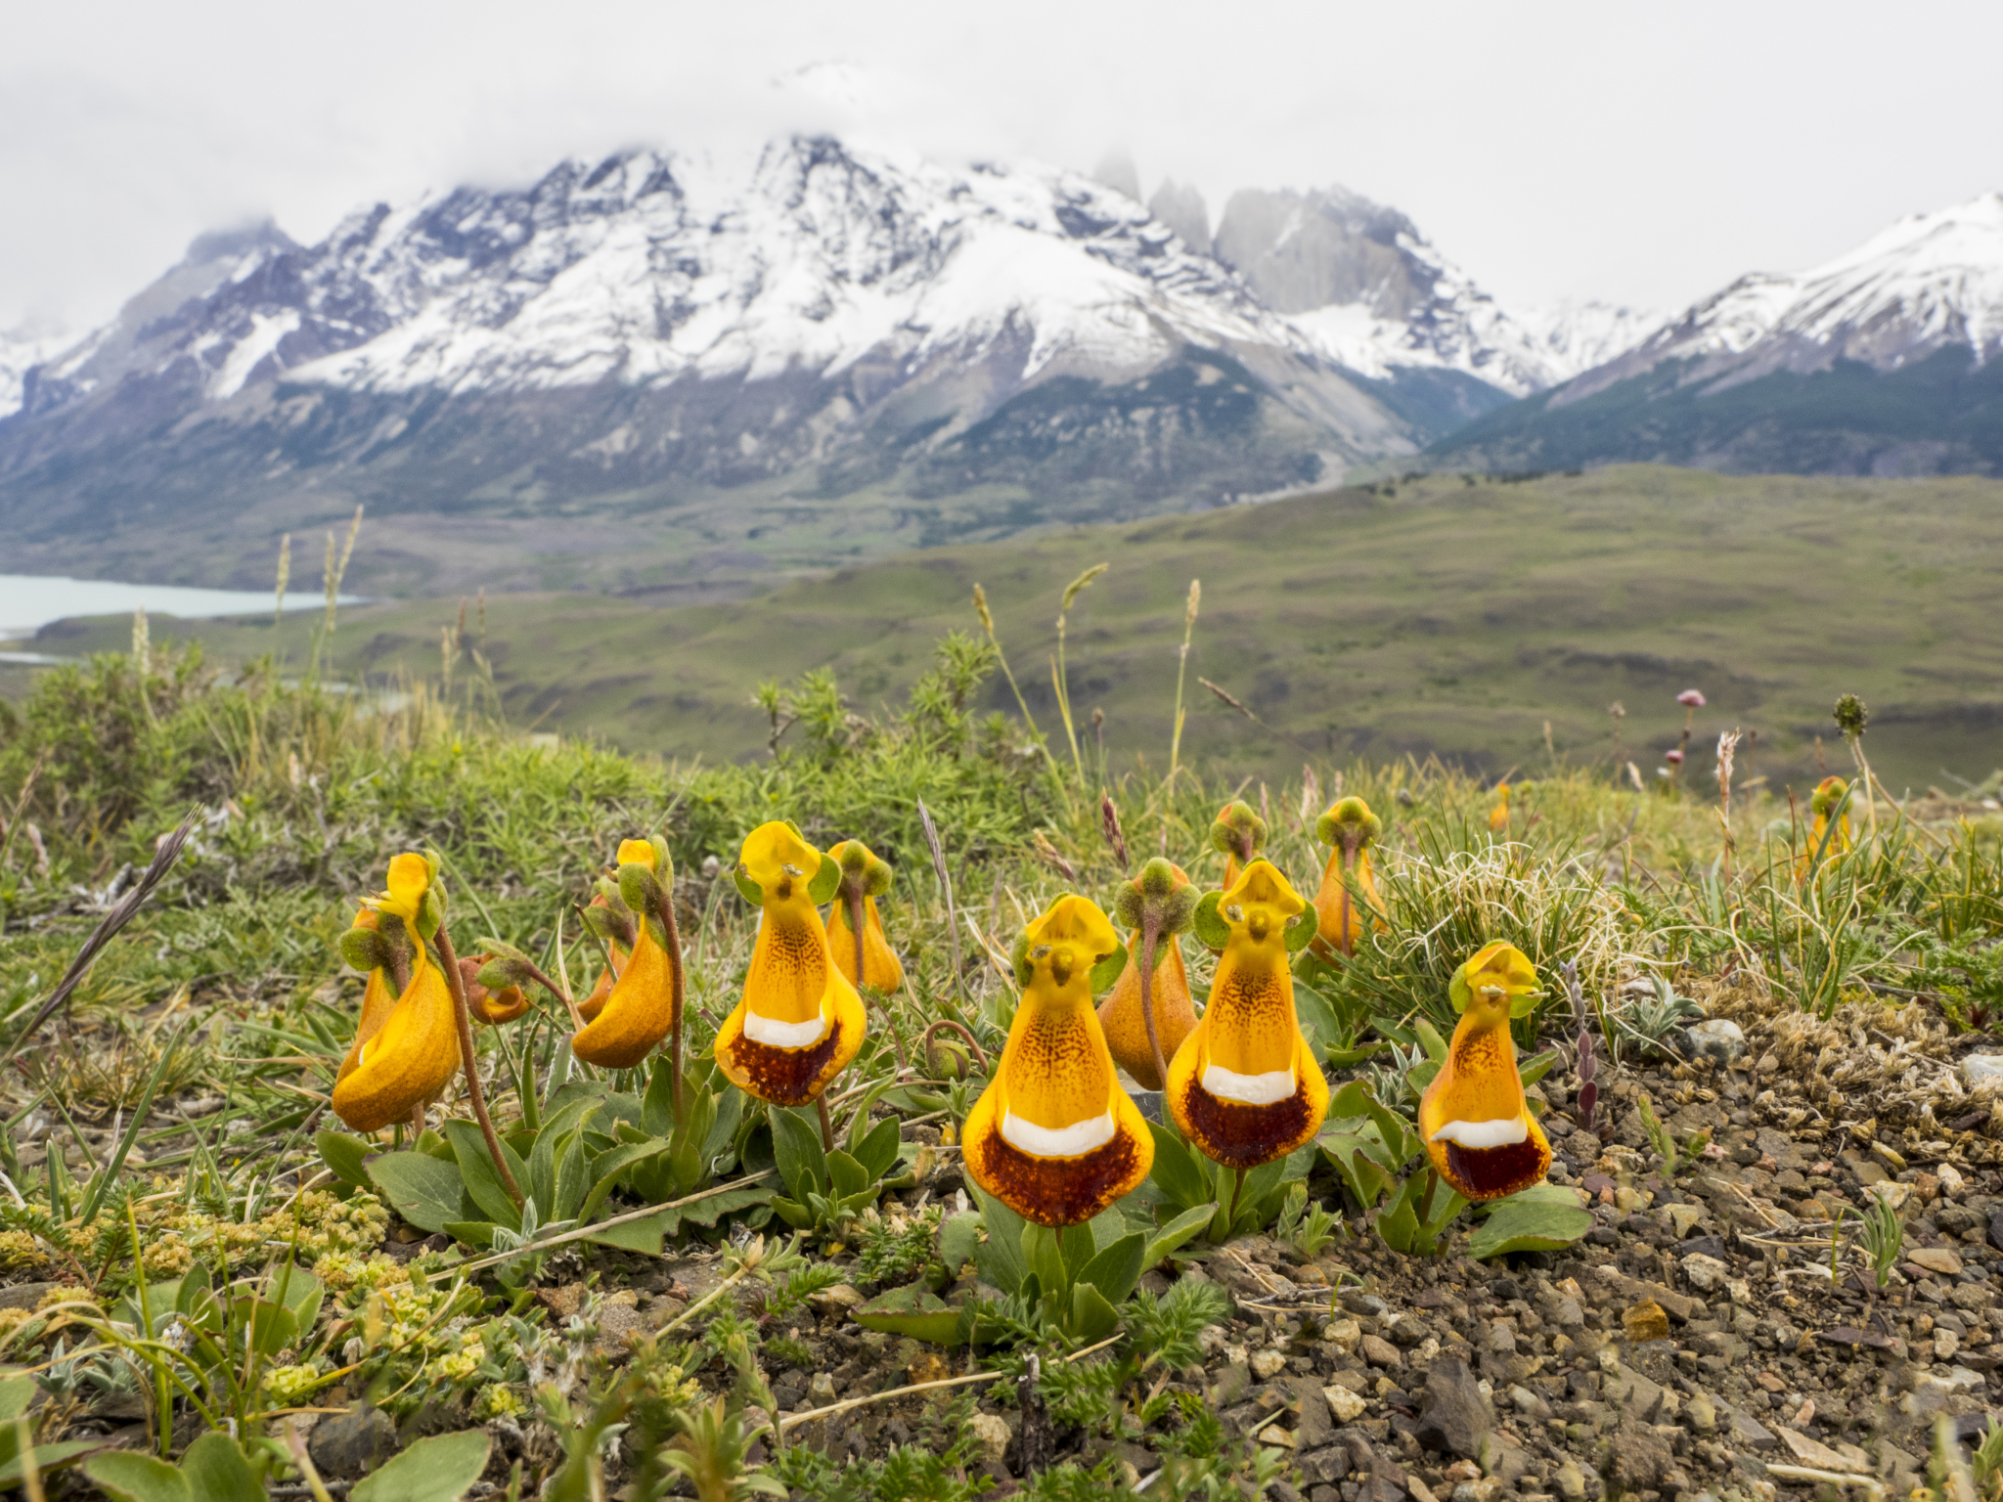 Virgin's slipper flower found in Patagonia